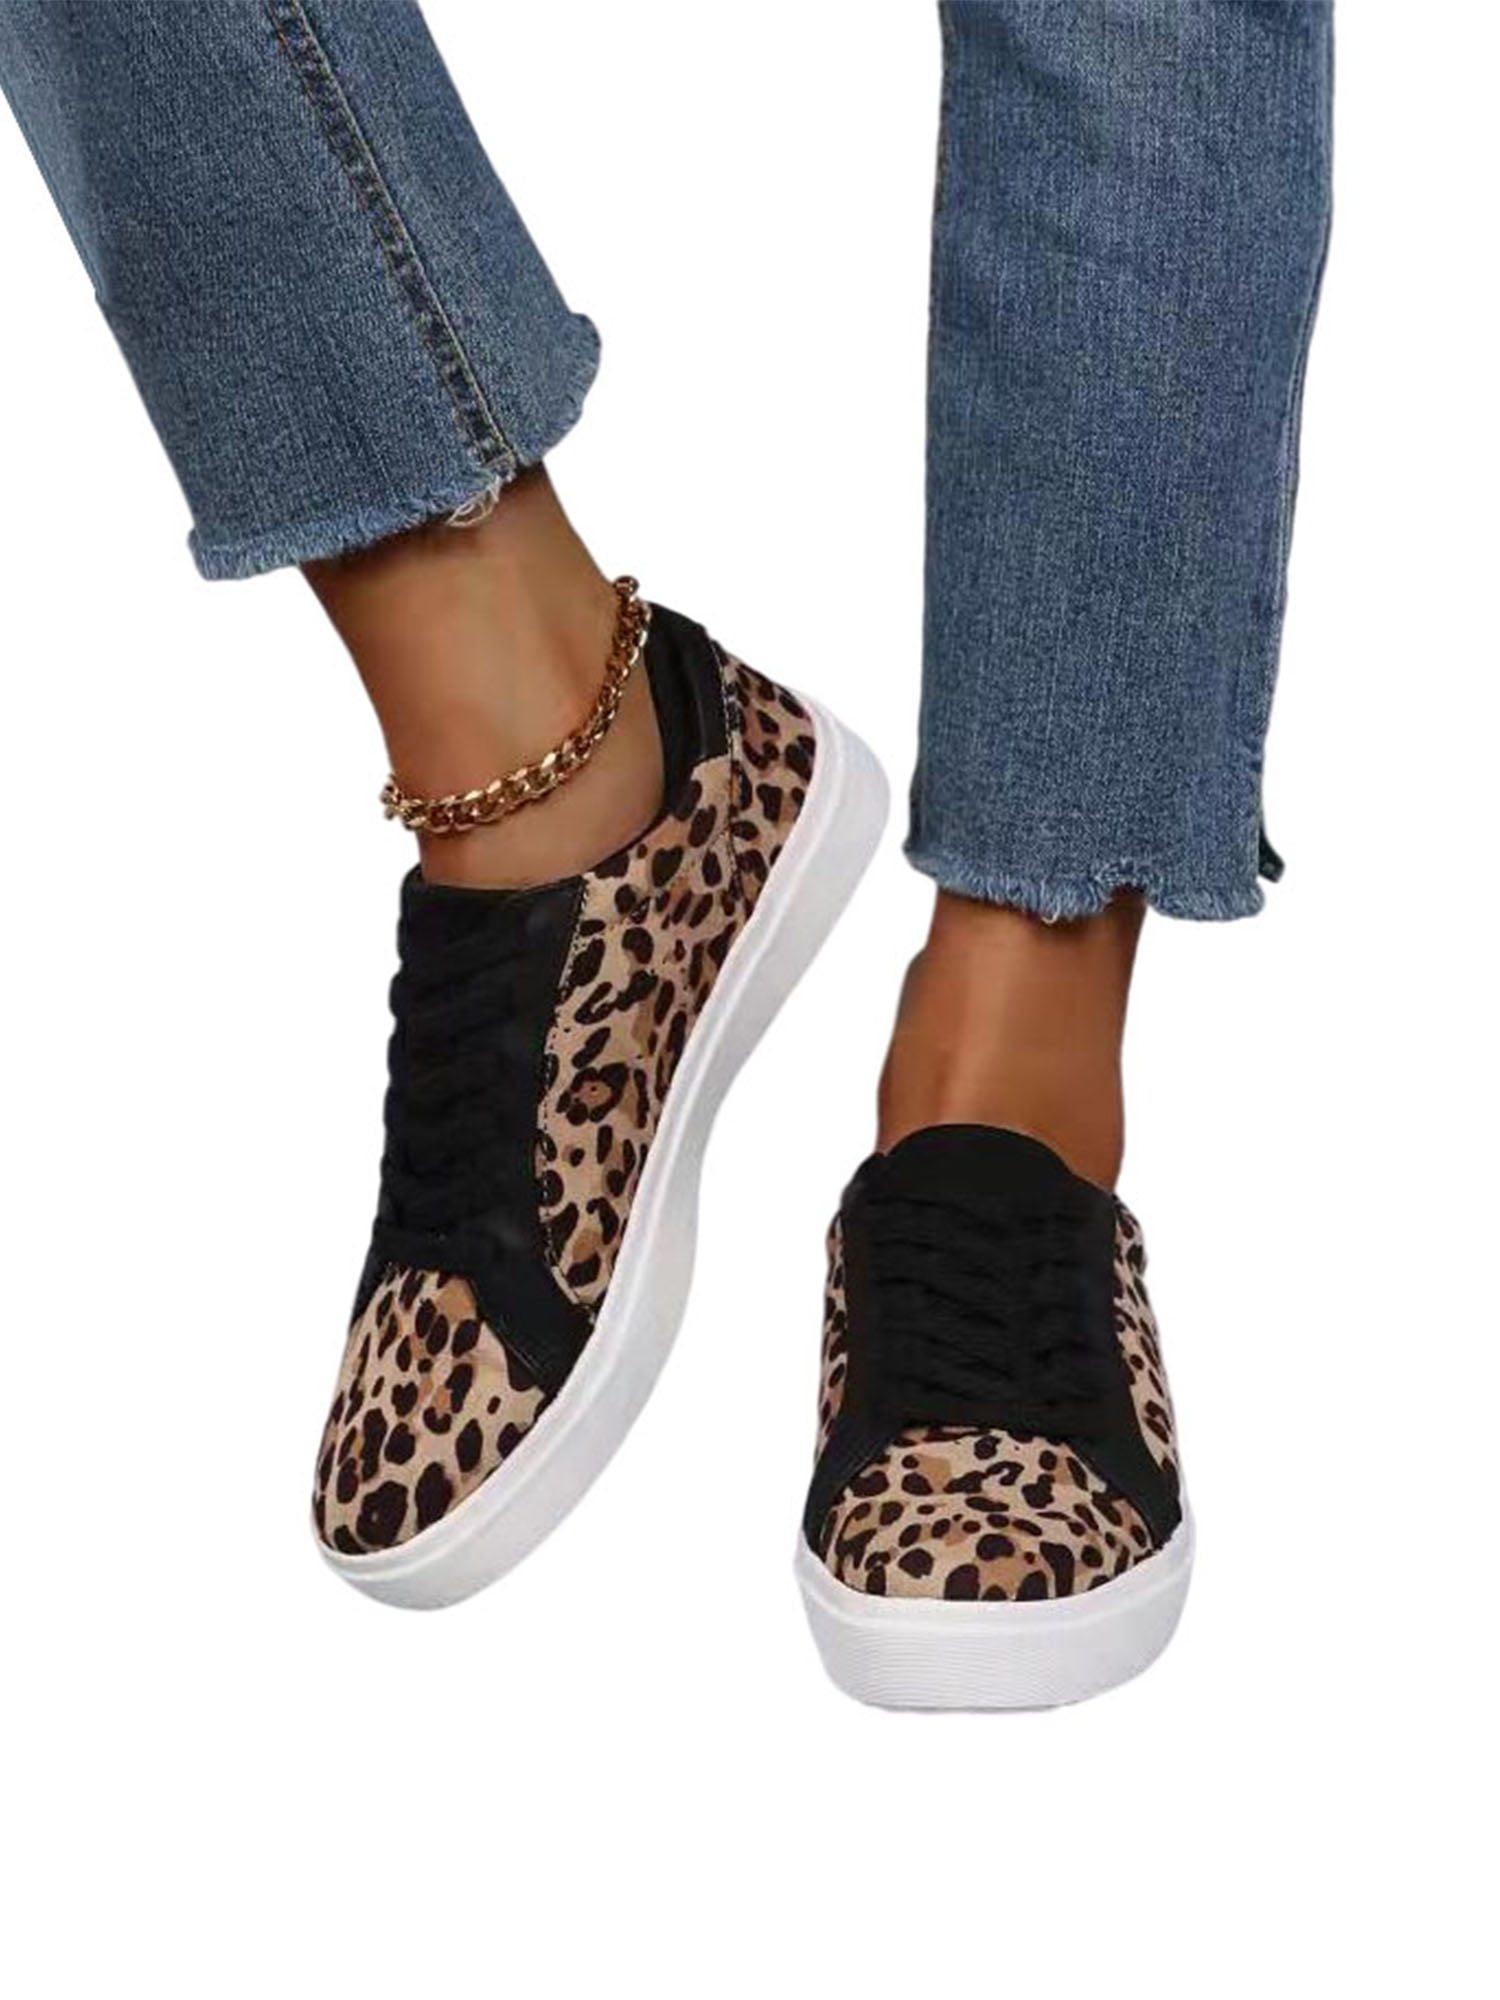 EXEBLUE Women Slip on Walking Shoes Mesh Fashion Platform Sneakers Comfort Wedge Loafers 